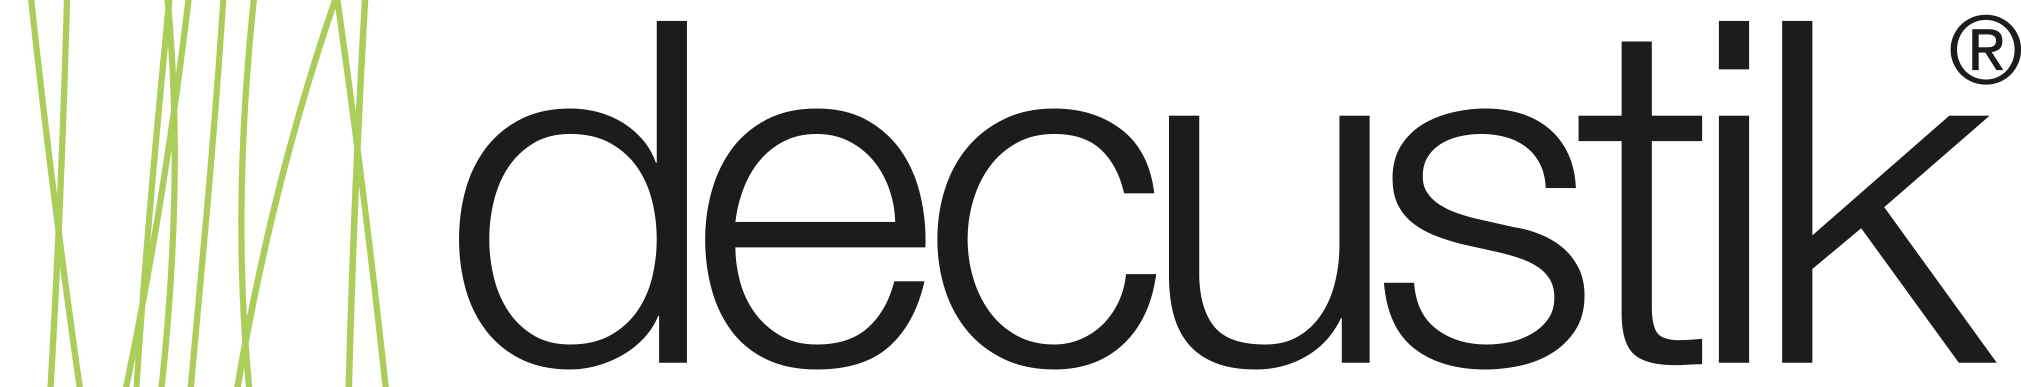 decustik Logo.png